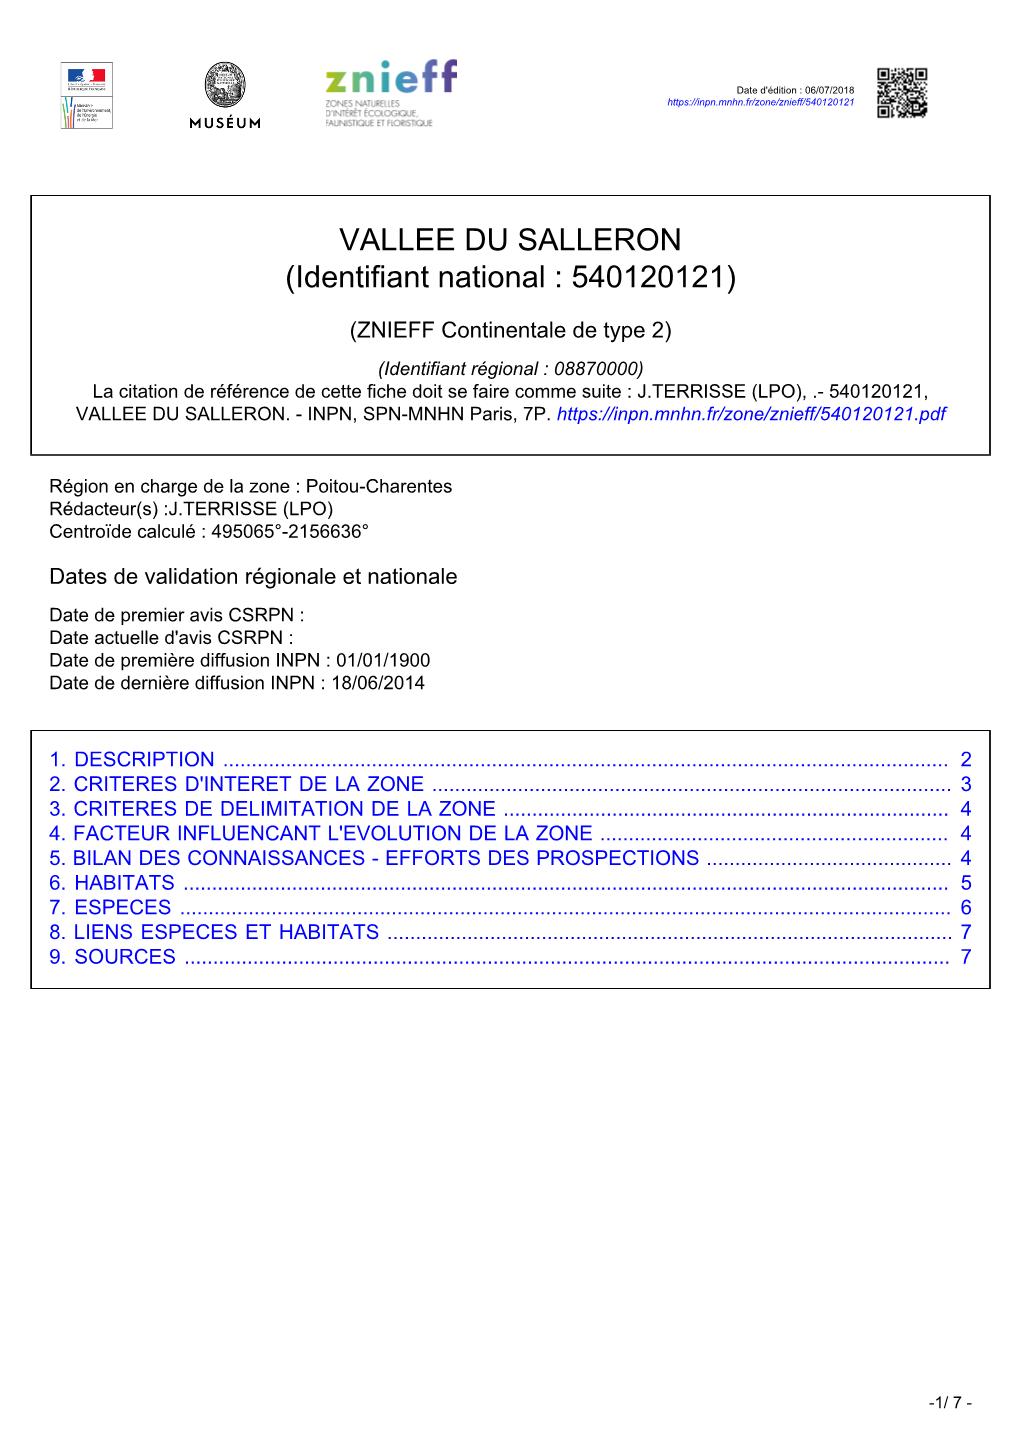 VALLEE DU SALLERON (Identifiant National : 540120121)